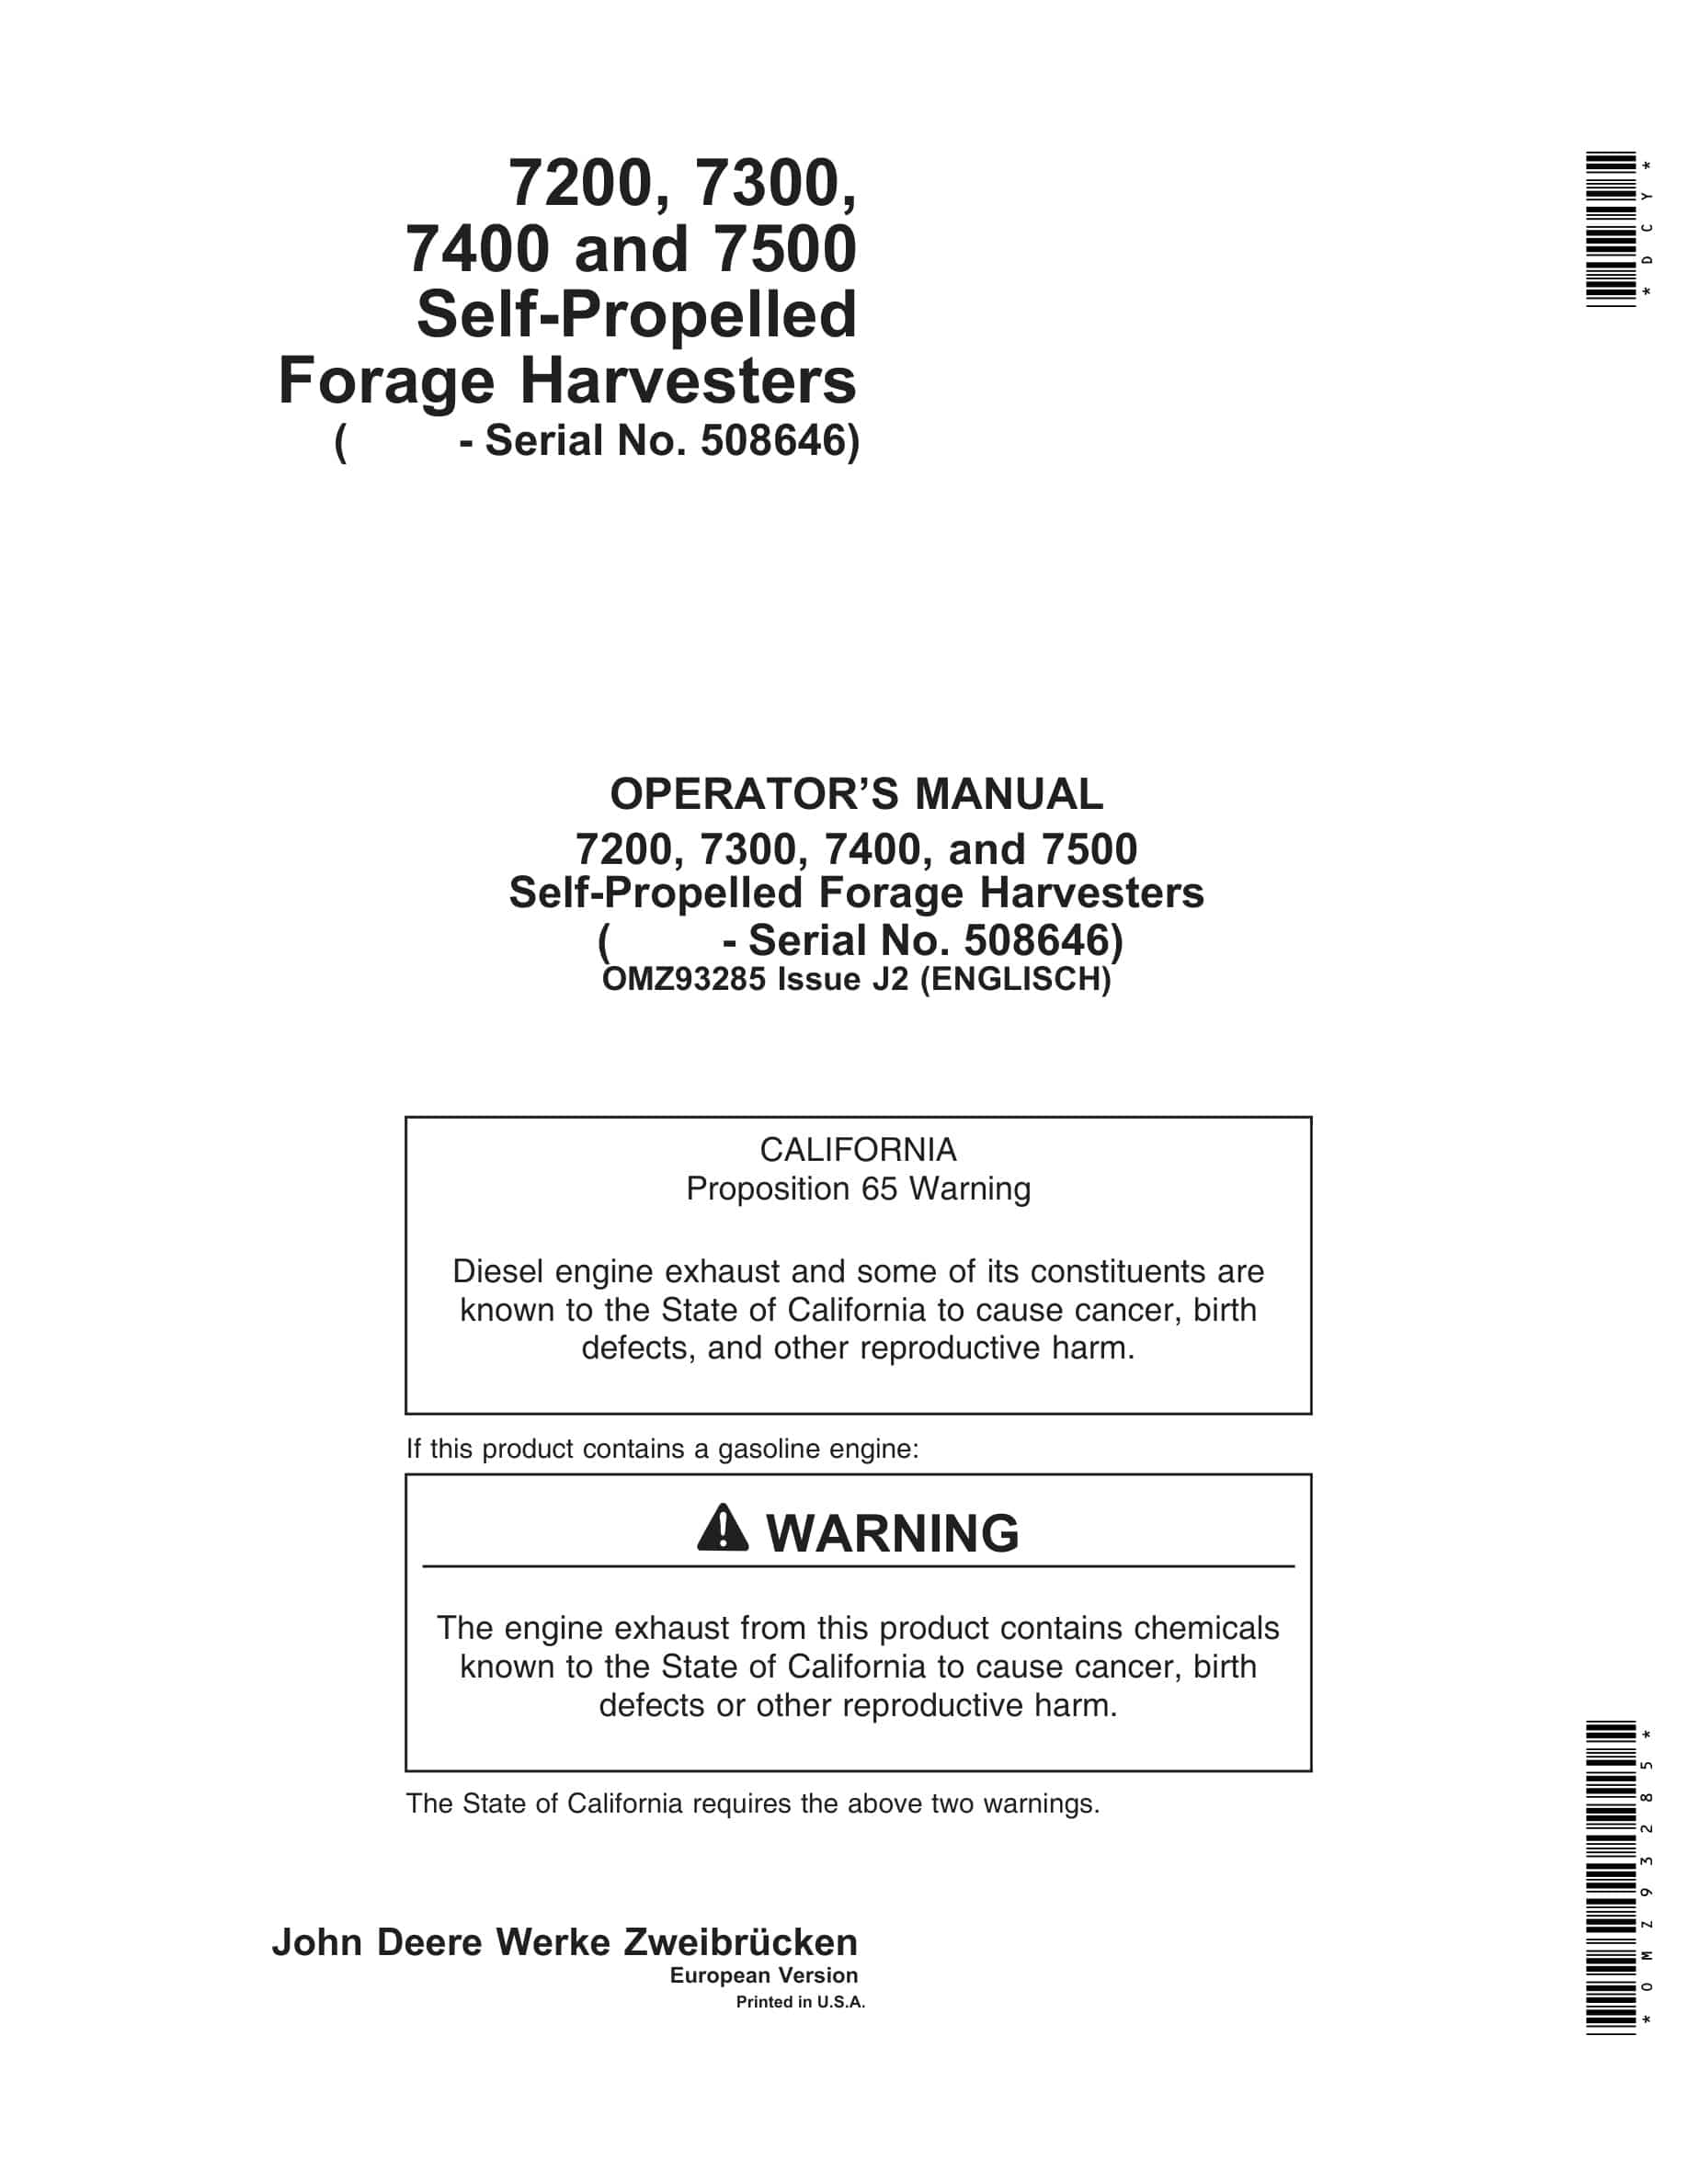 John Deere 7200, 7300, 7400 and 7500 Self-Propelled Forage Harvester Operator Manual OMZ93285-1